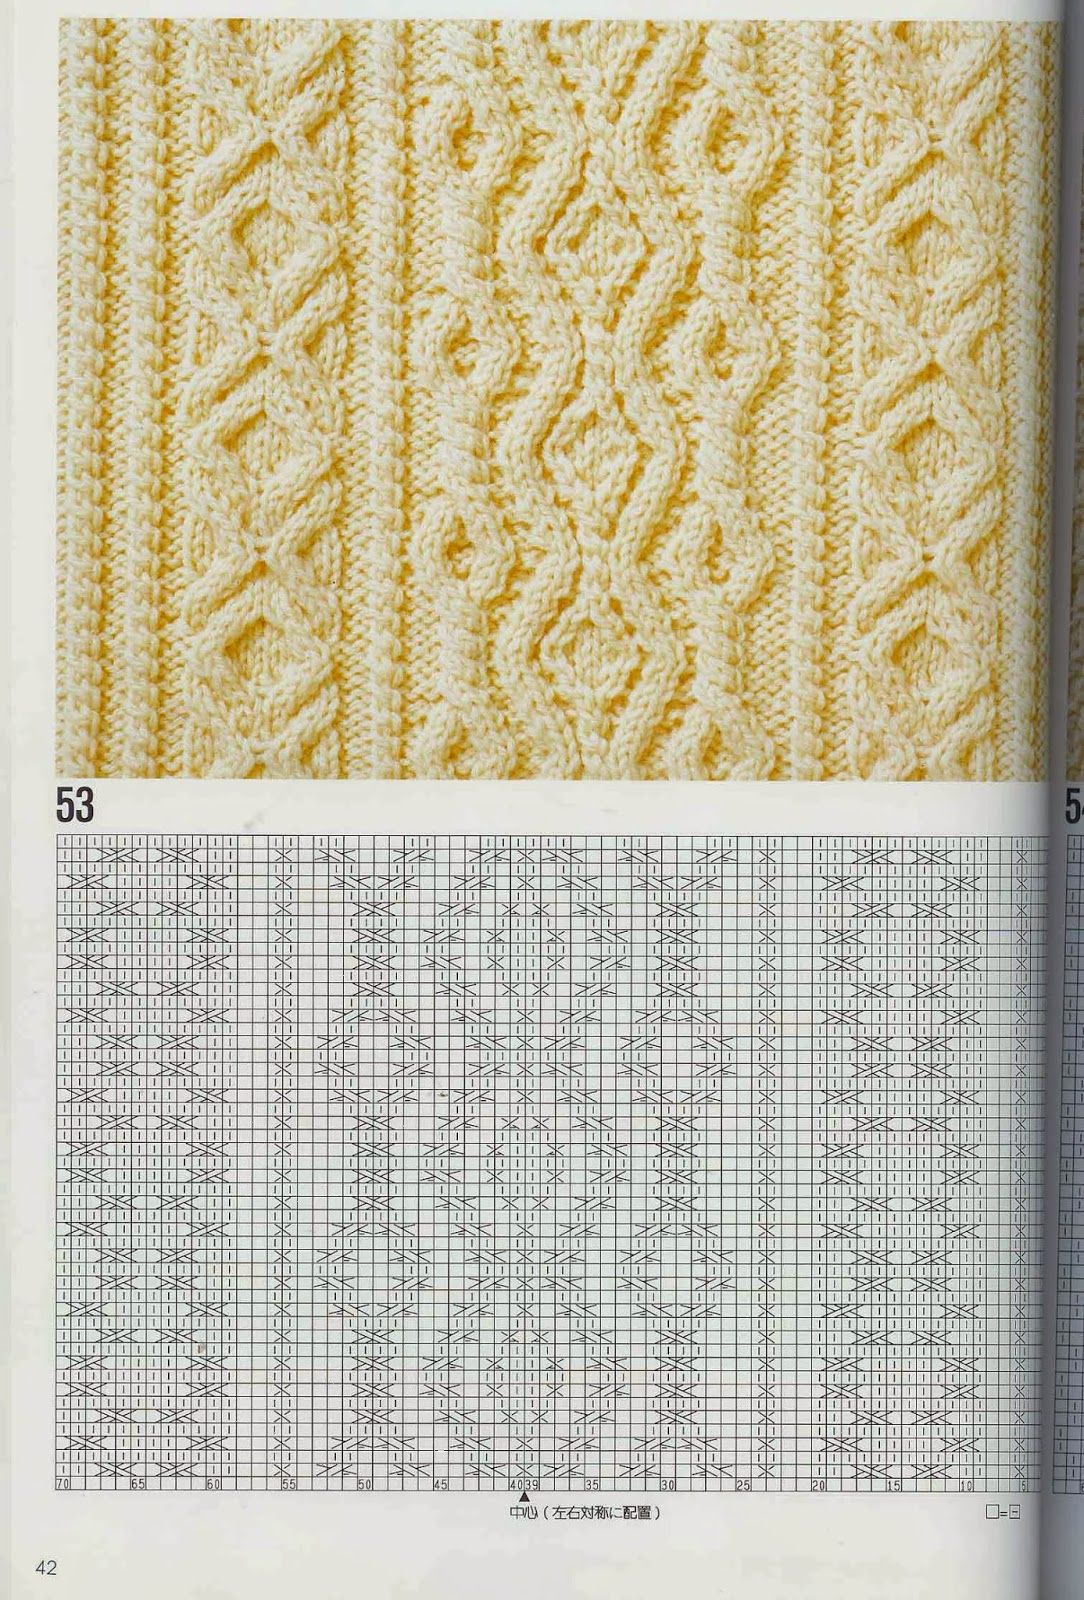 Irina: BOOK "100 aran patterns".